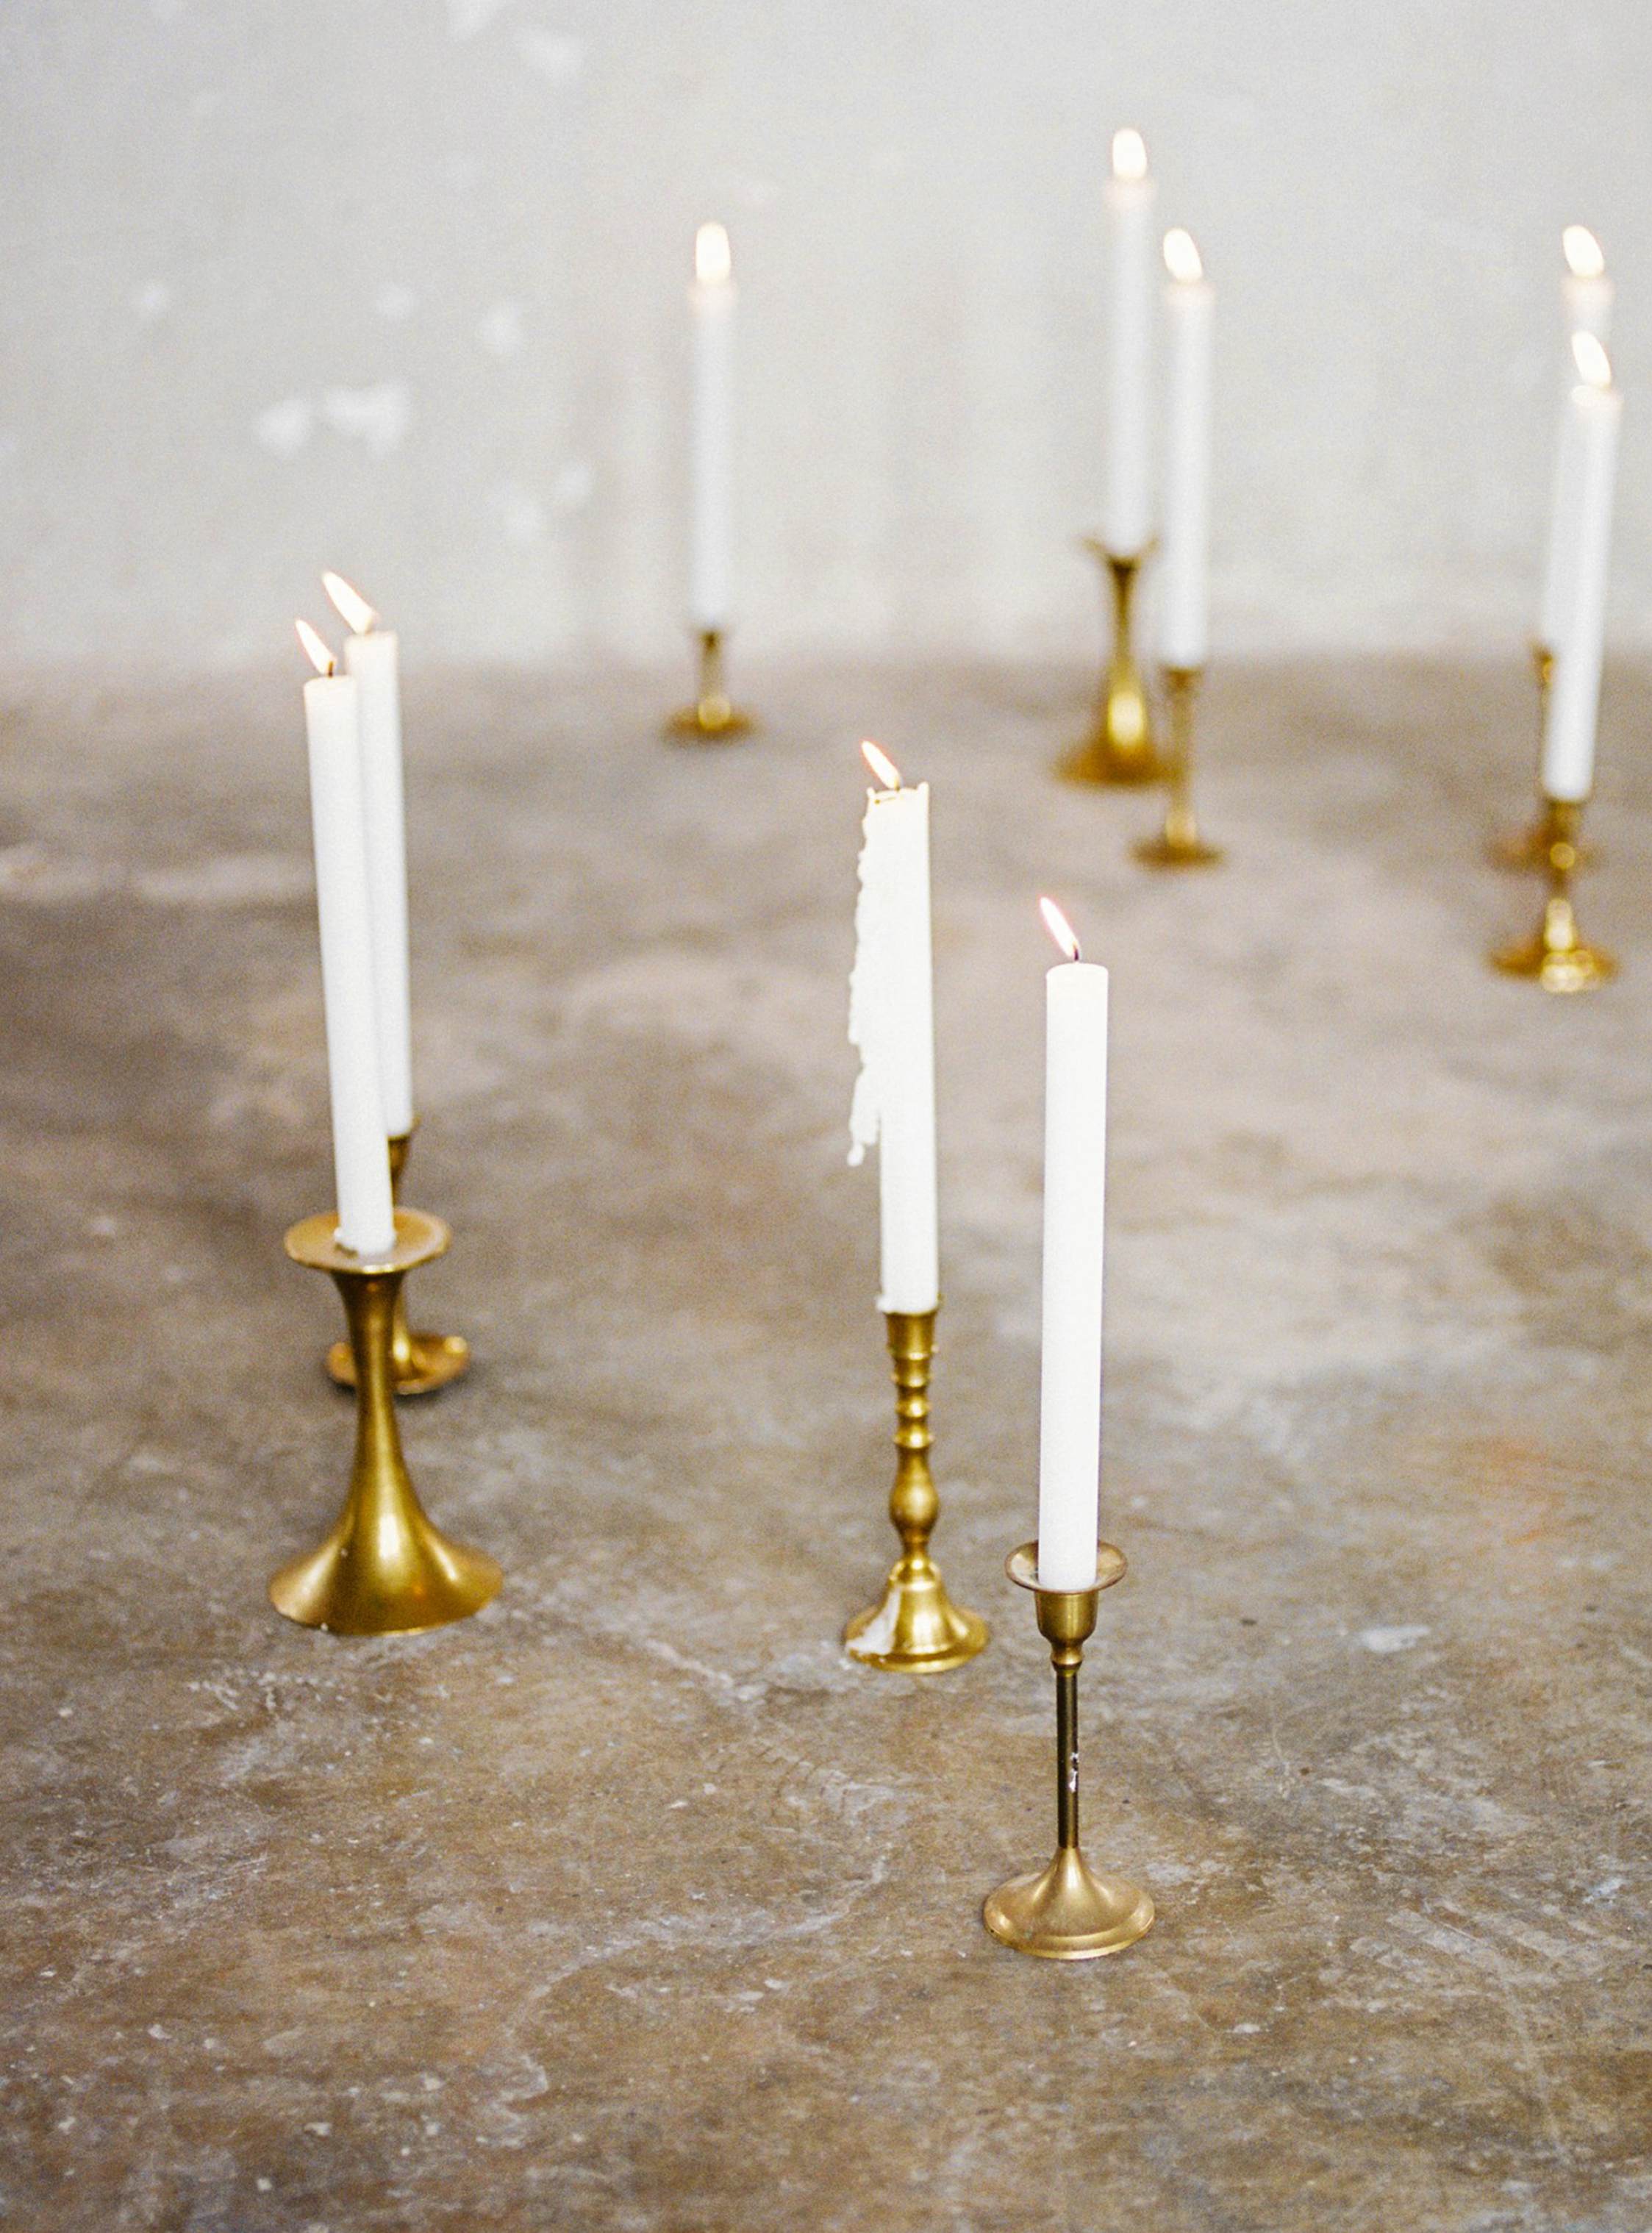 Wedding photographer Minimalistic Editorial Wedding shoot - Wedding Candles